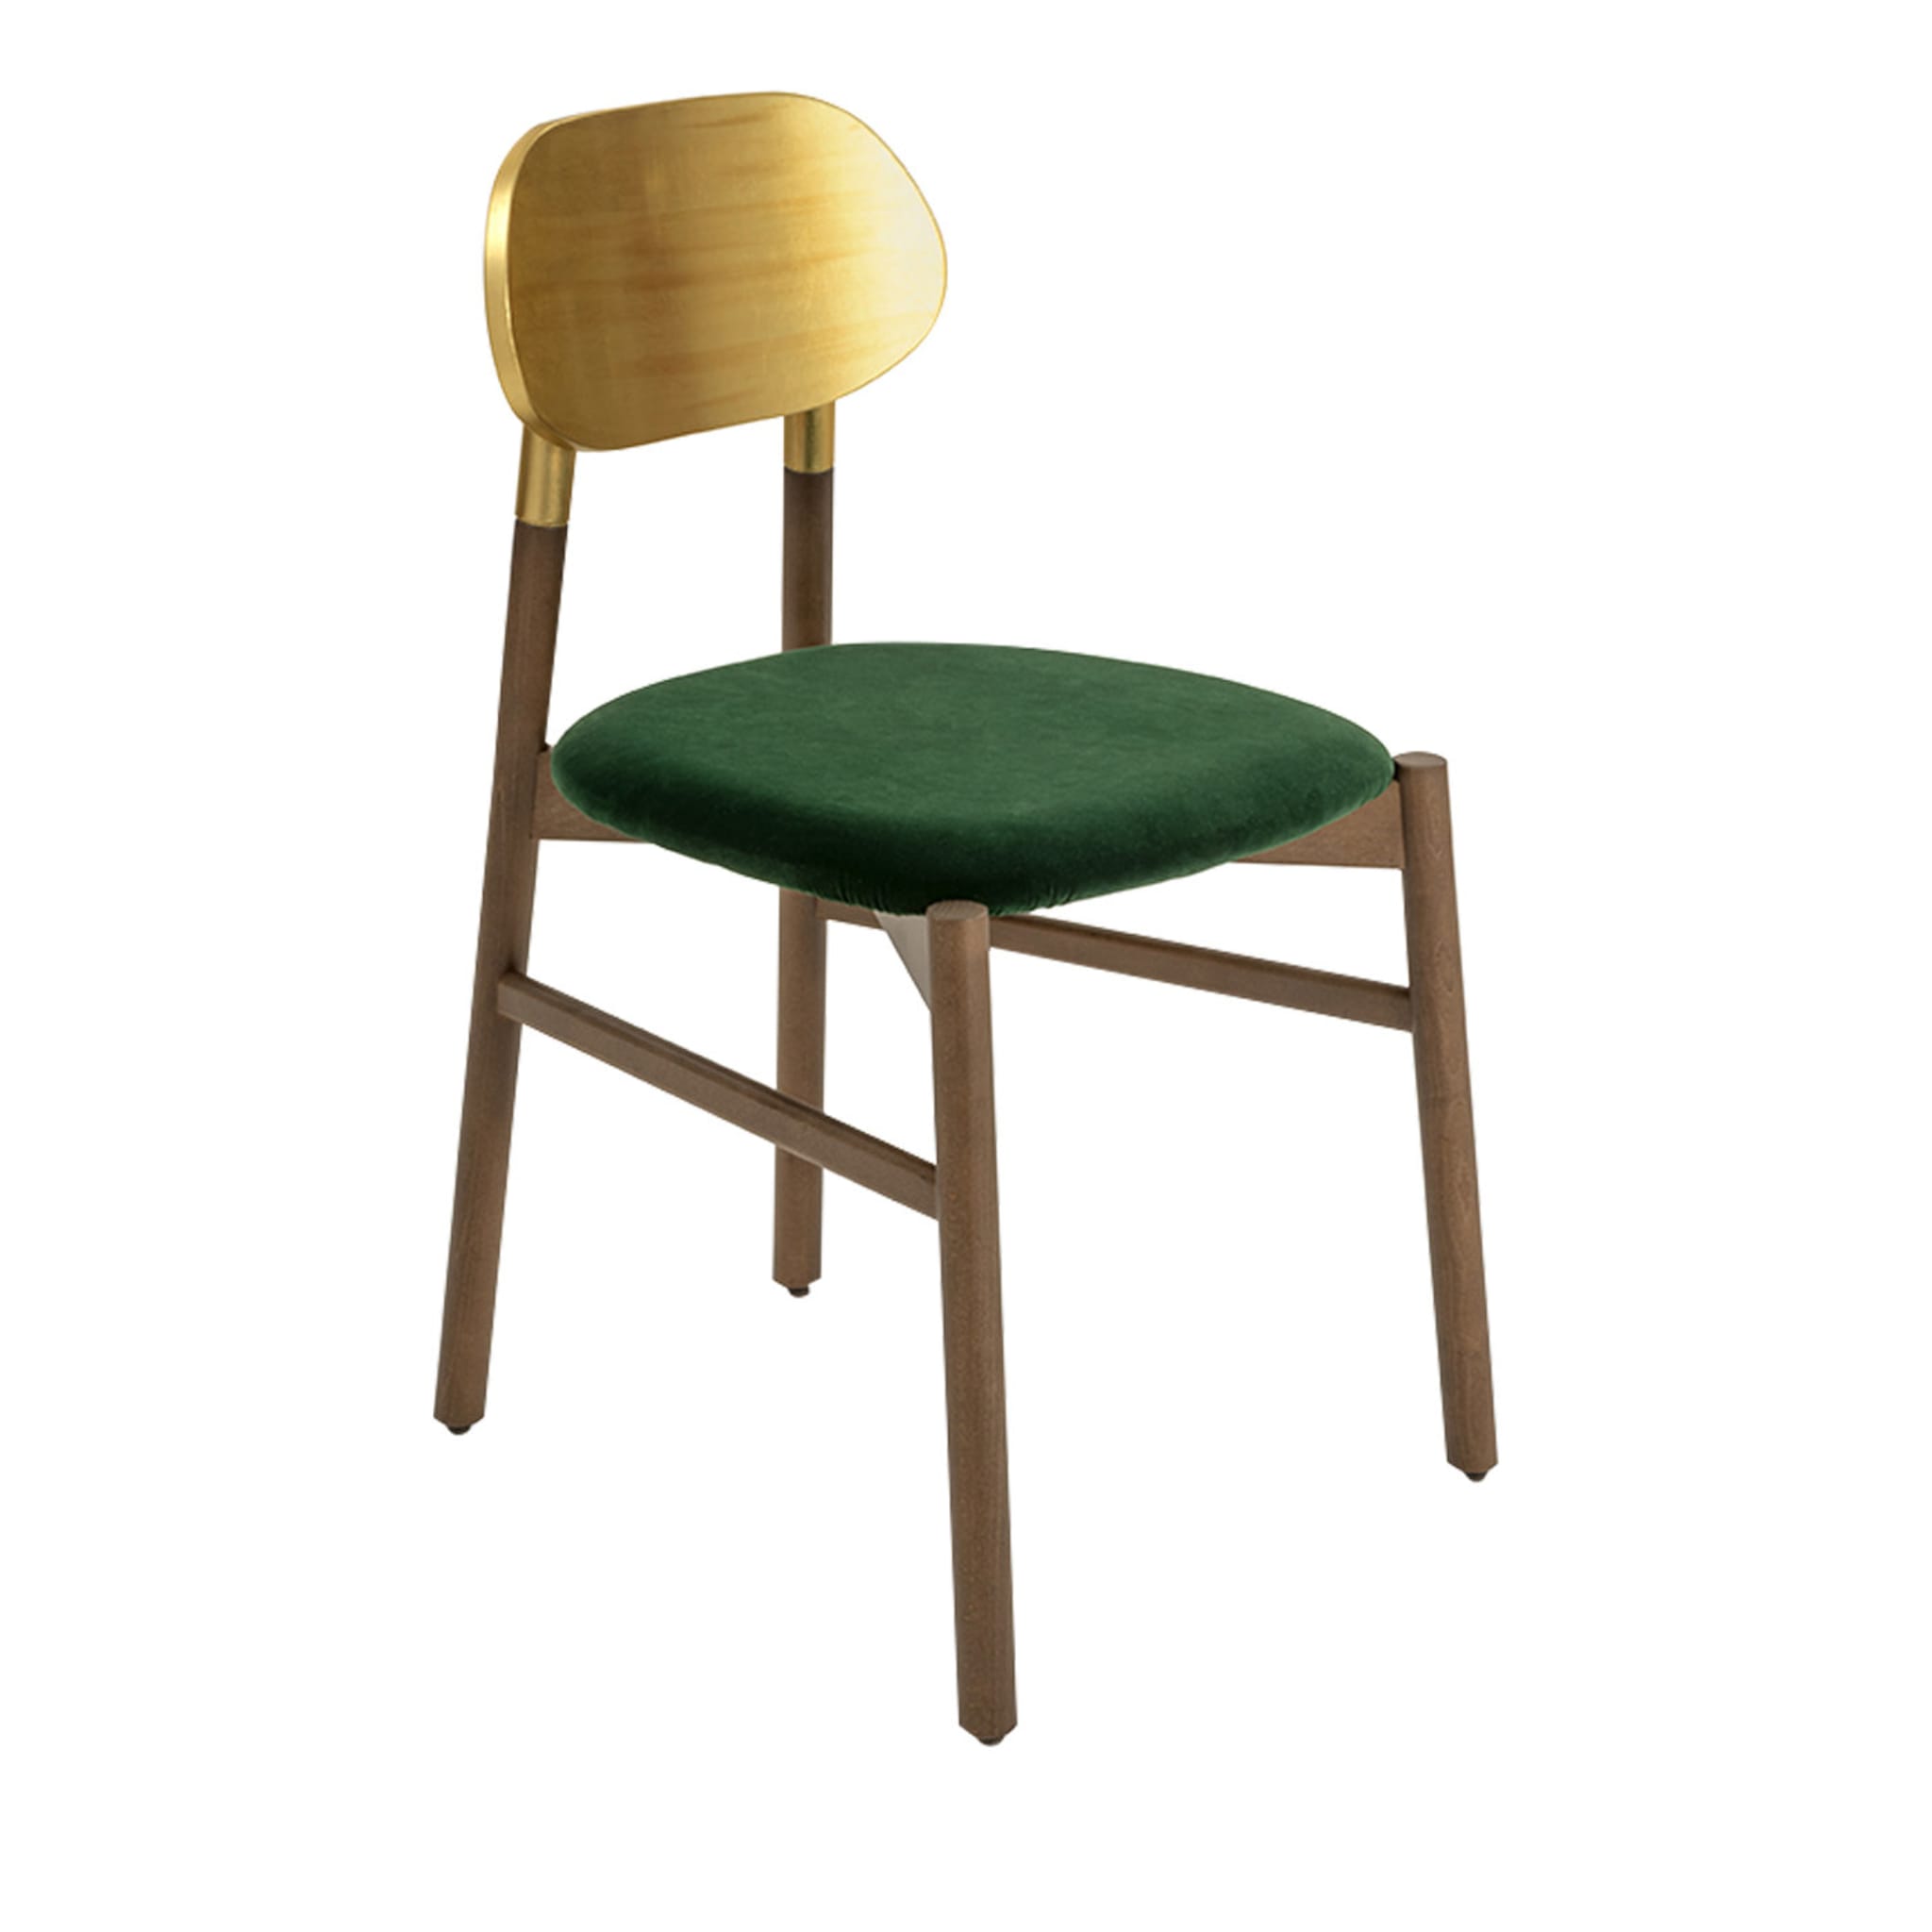 Bokken Gold and Emerald Chair by Bellavista & Piccini - Main view